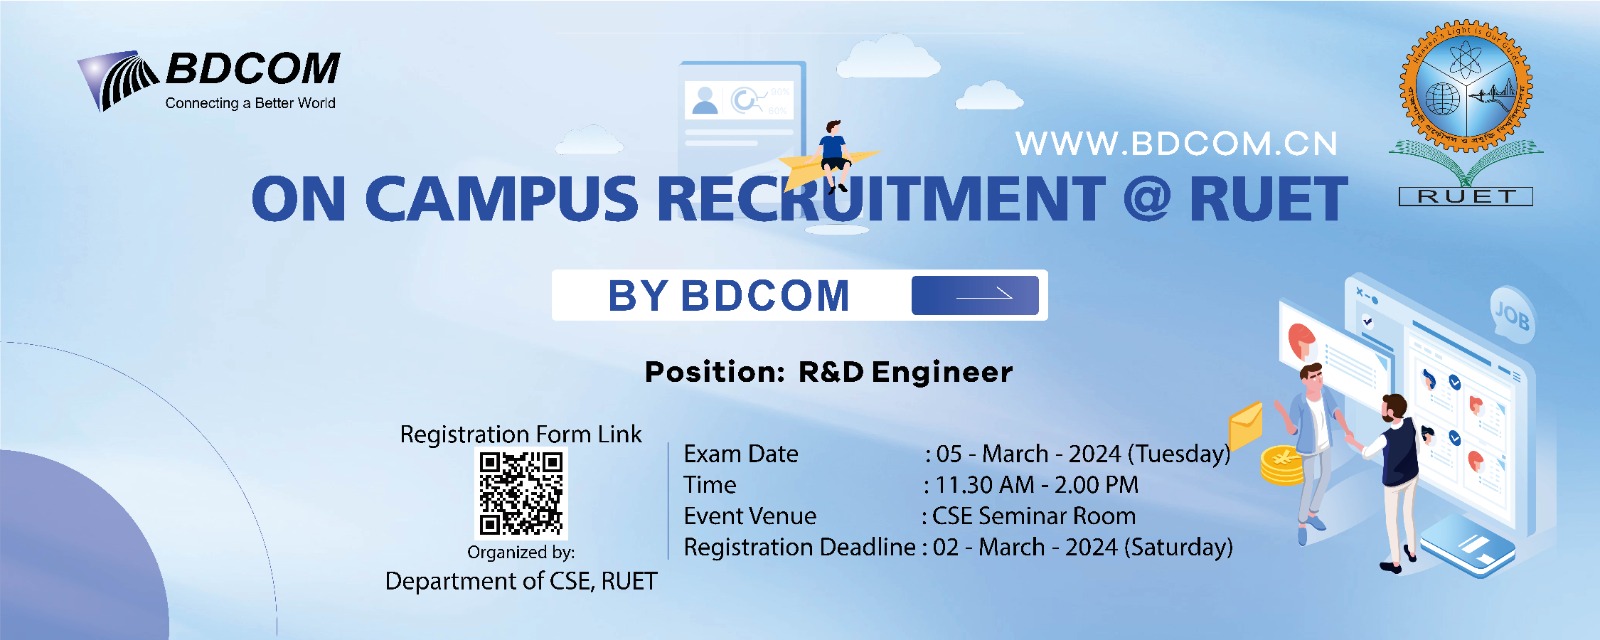 BDCOM-RUET Campus Recruitment Registration